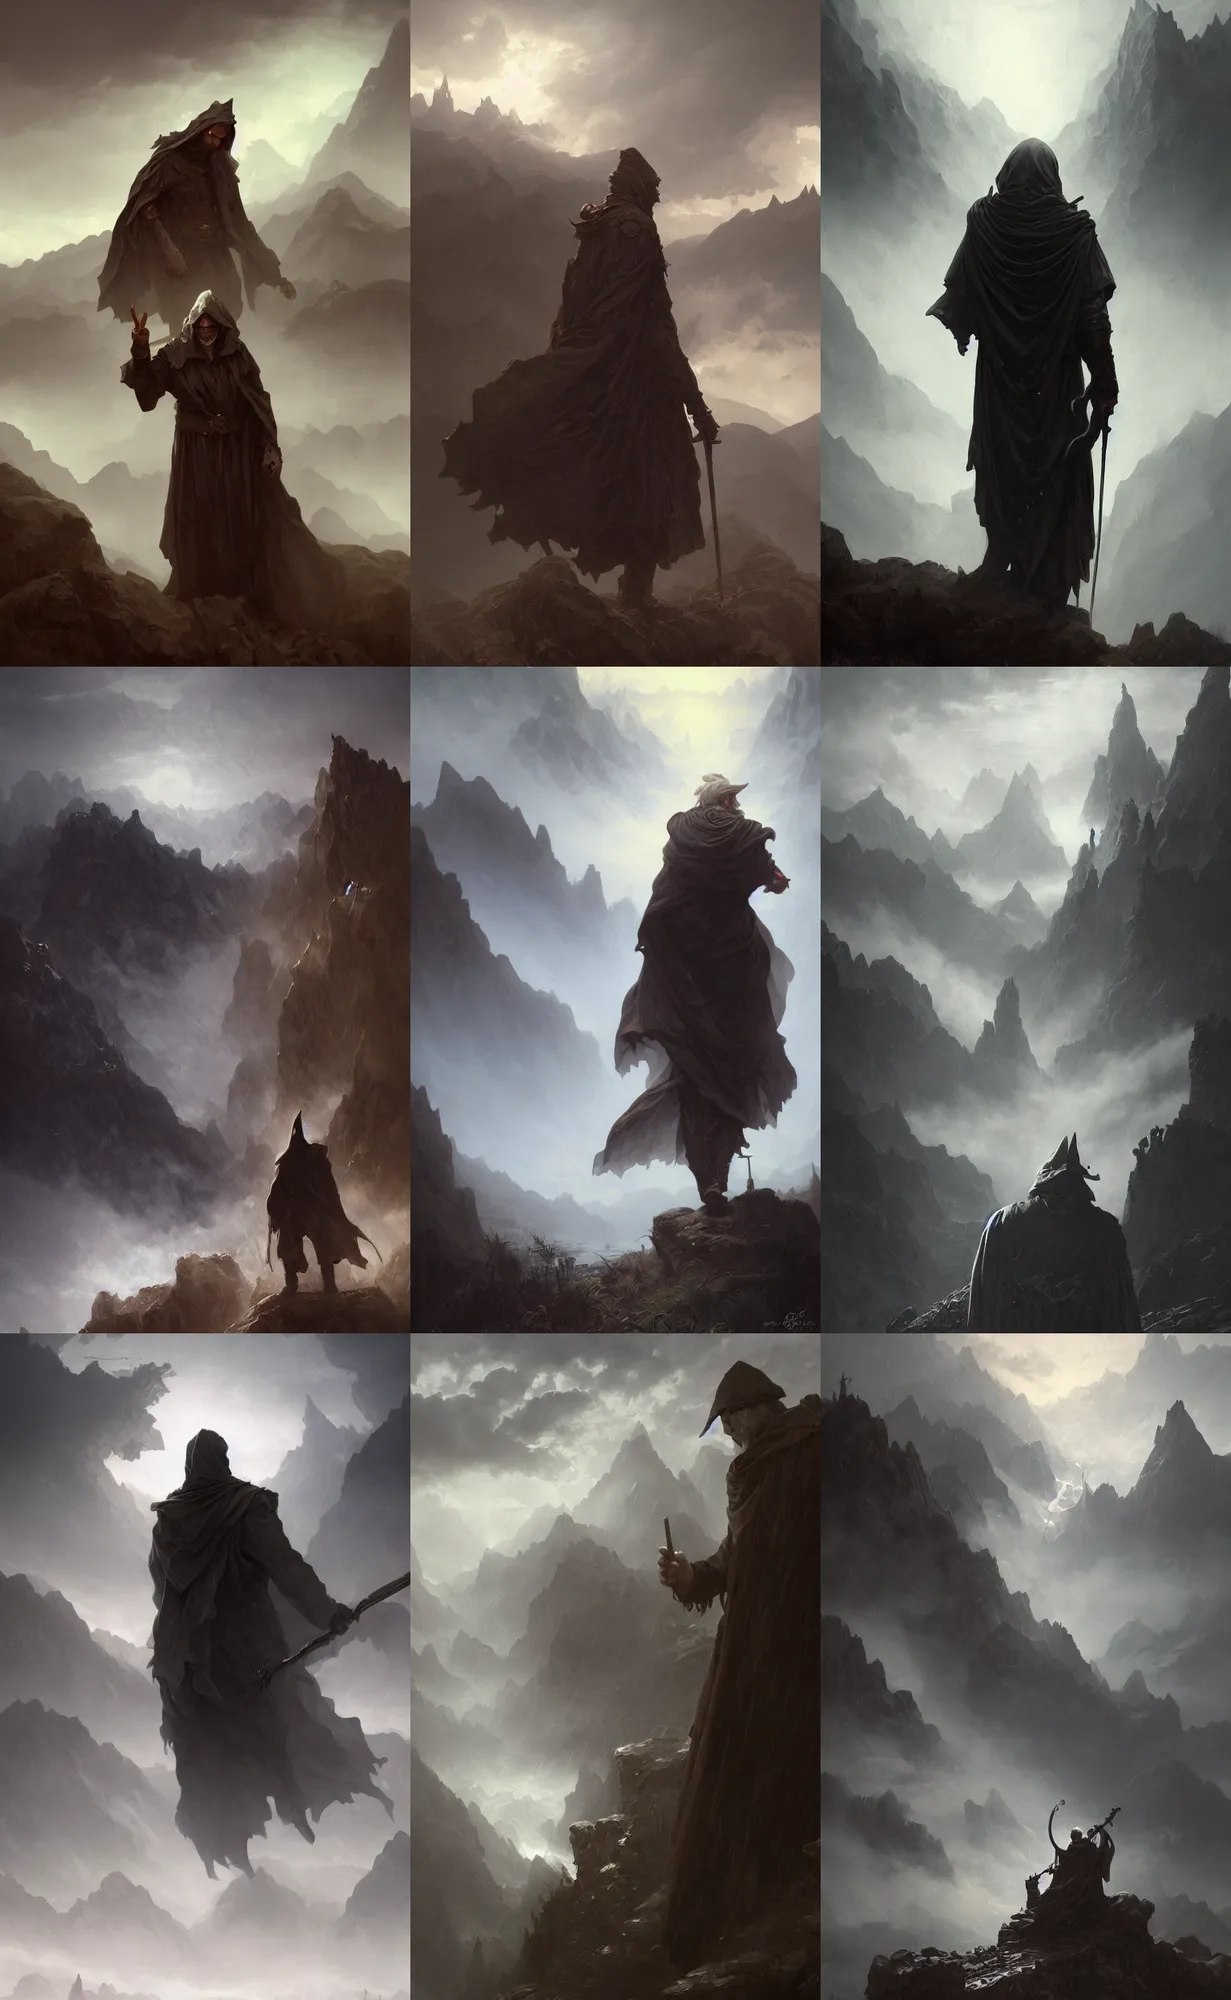 Prompt: old male warlock, ghost, mountains, dark fantasy, fog, clouds, rain, wind, intricate, highly detailed, artstation, illustration, jurgens, rutkowski, bouguereau